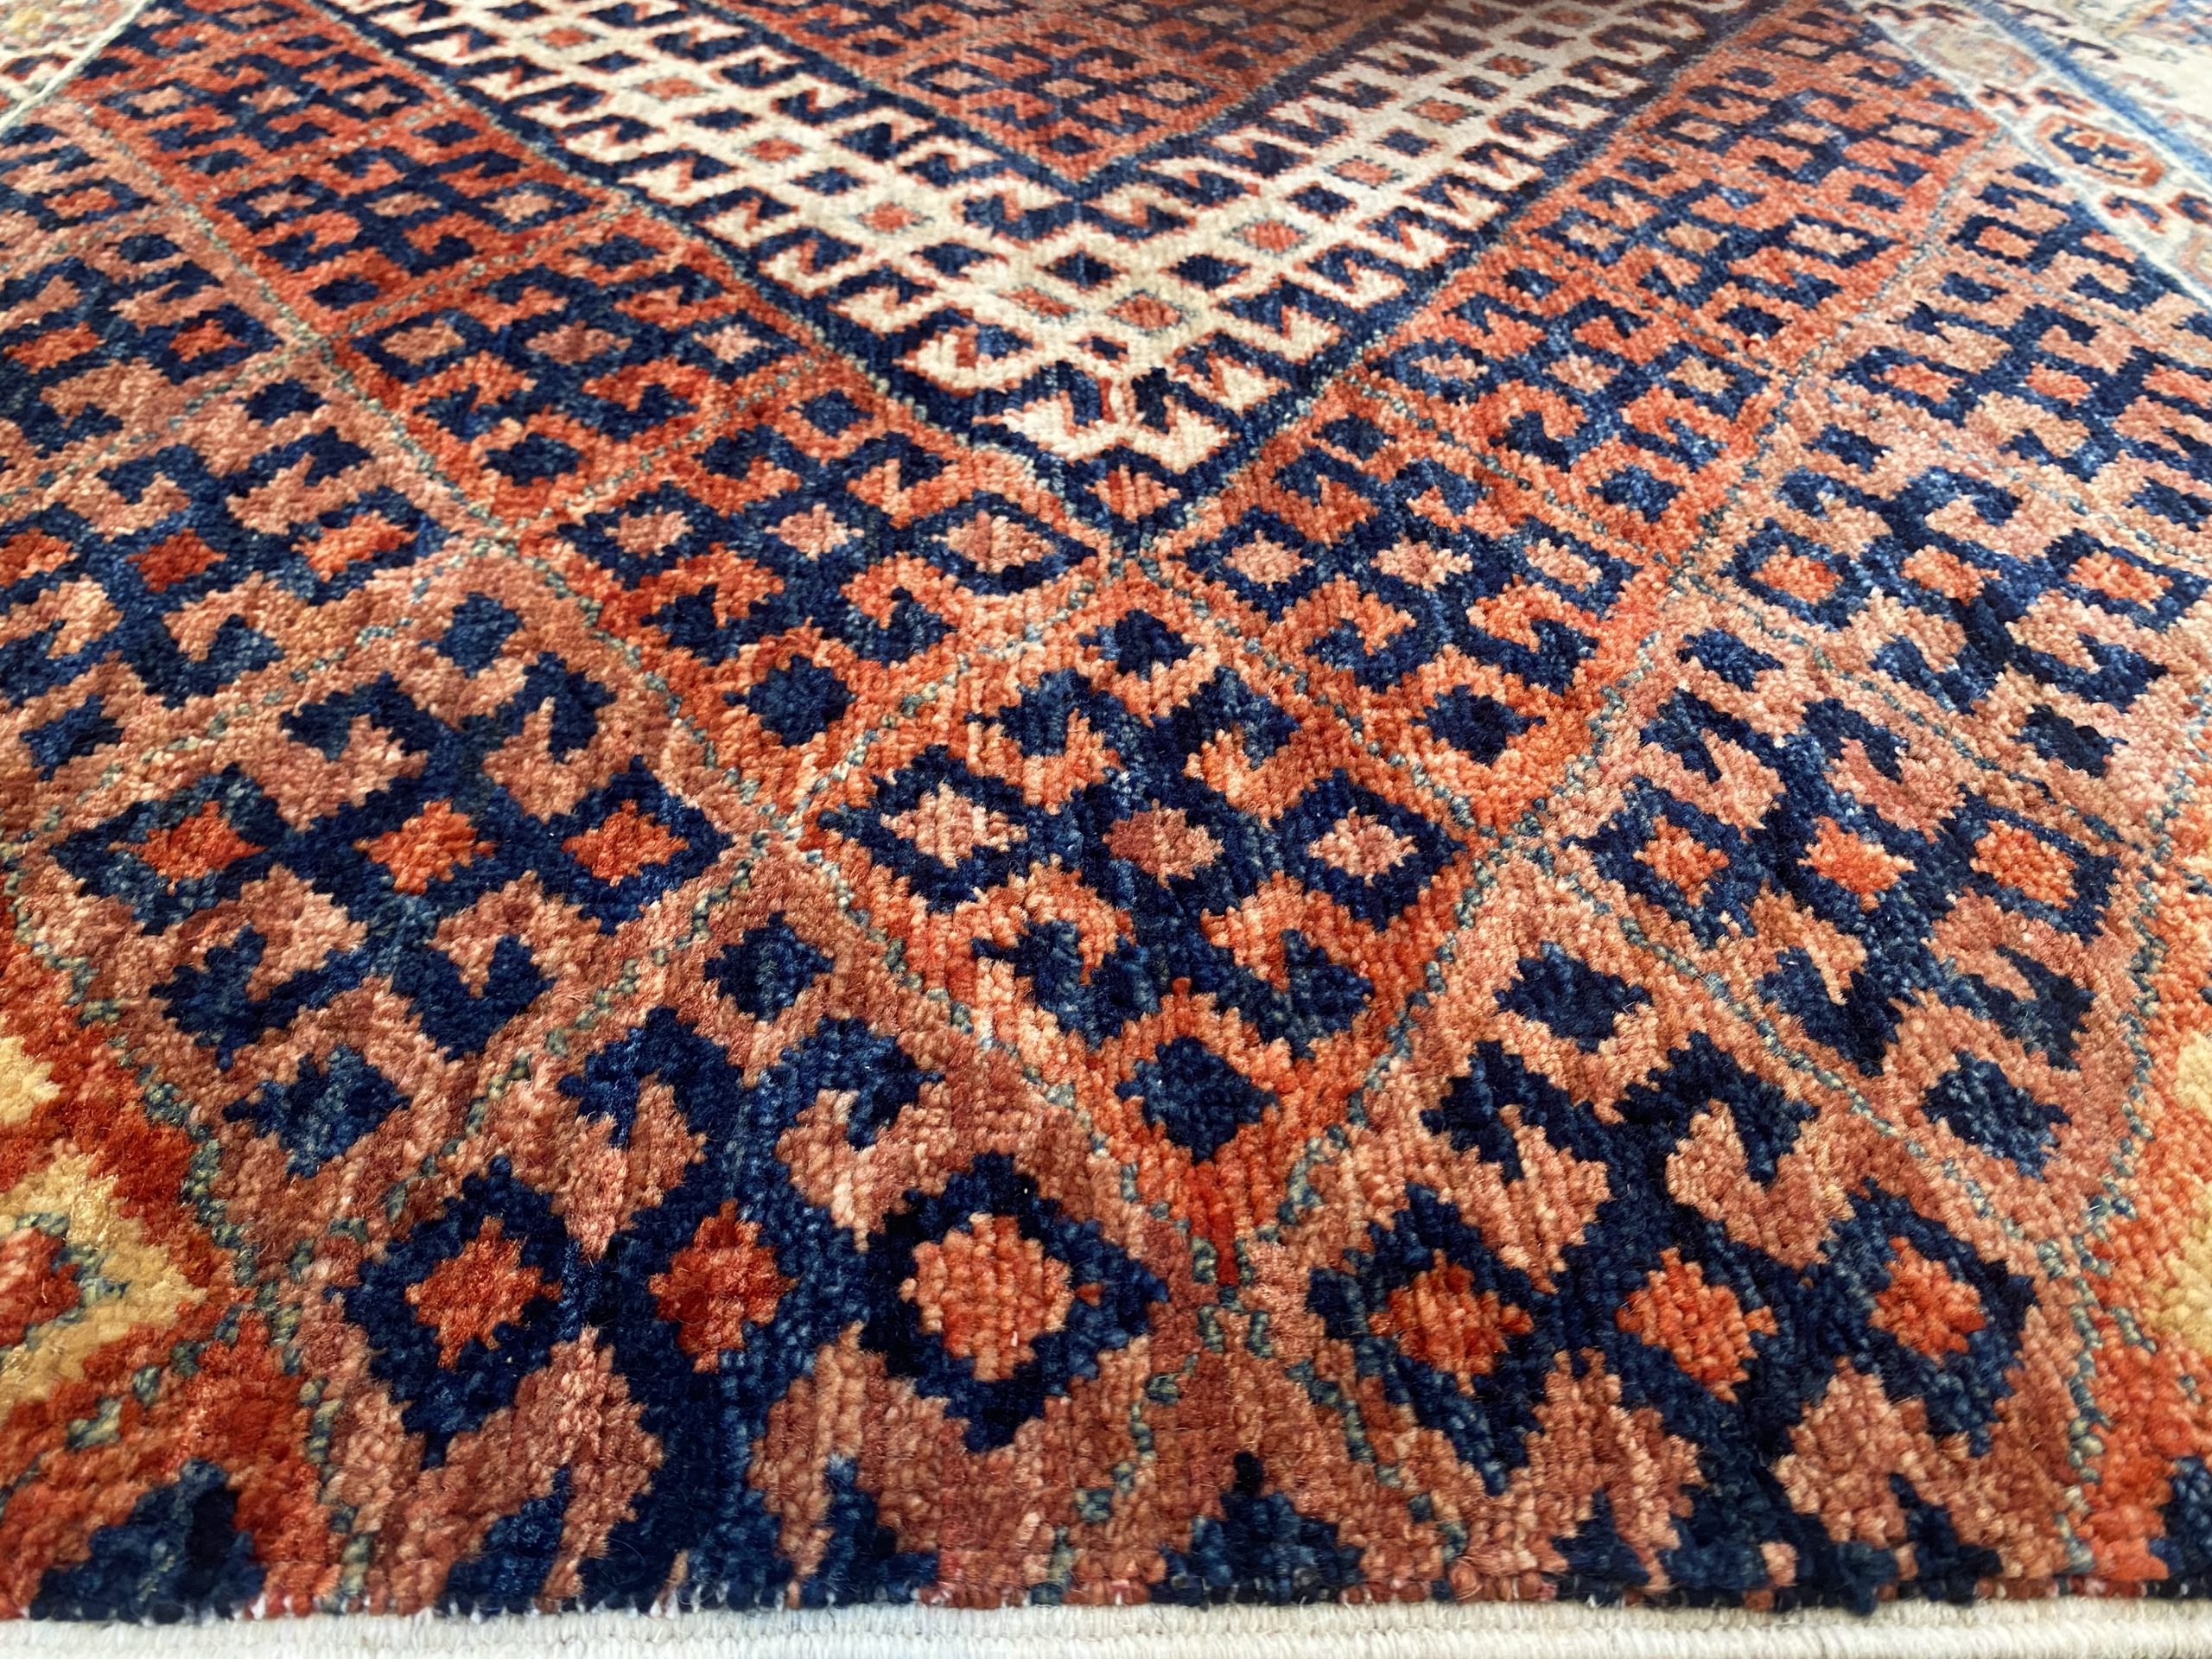 Rug# 26653, Afghan Turkaman weave, 19th century Kurdi-Khorjeen design, vegetable dyes, circa 2018, size 203x137cm (1)